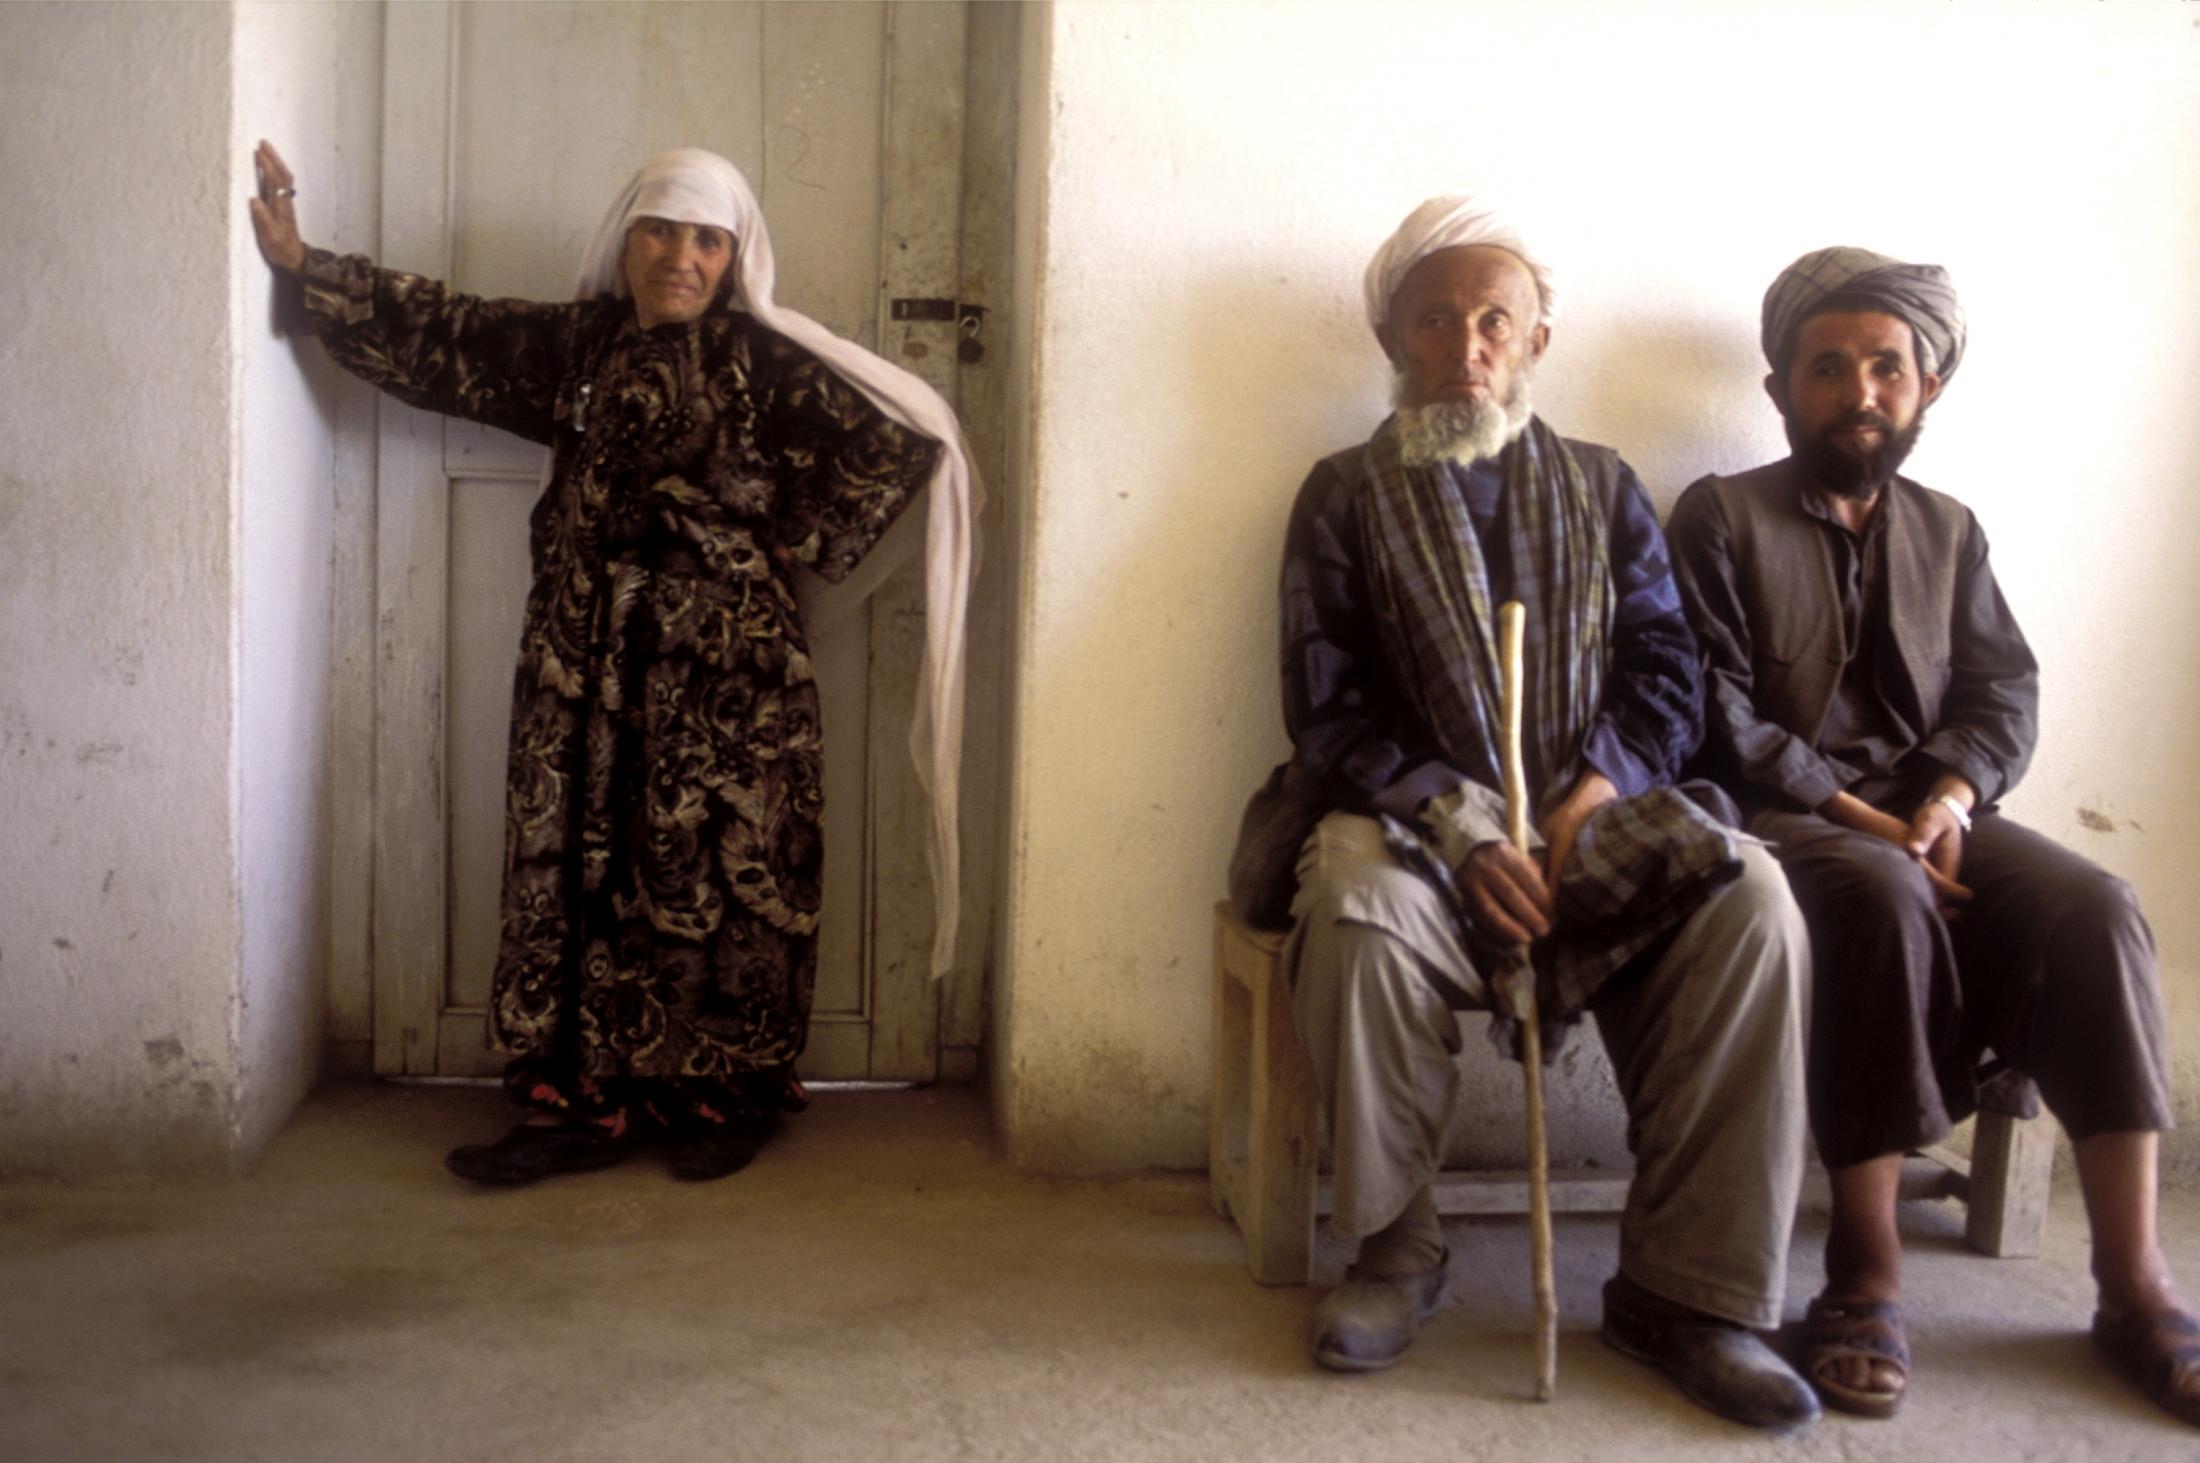 AFGHANISTAN 2002